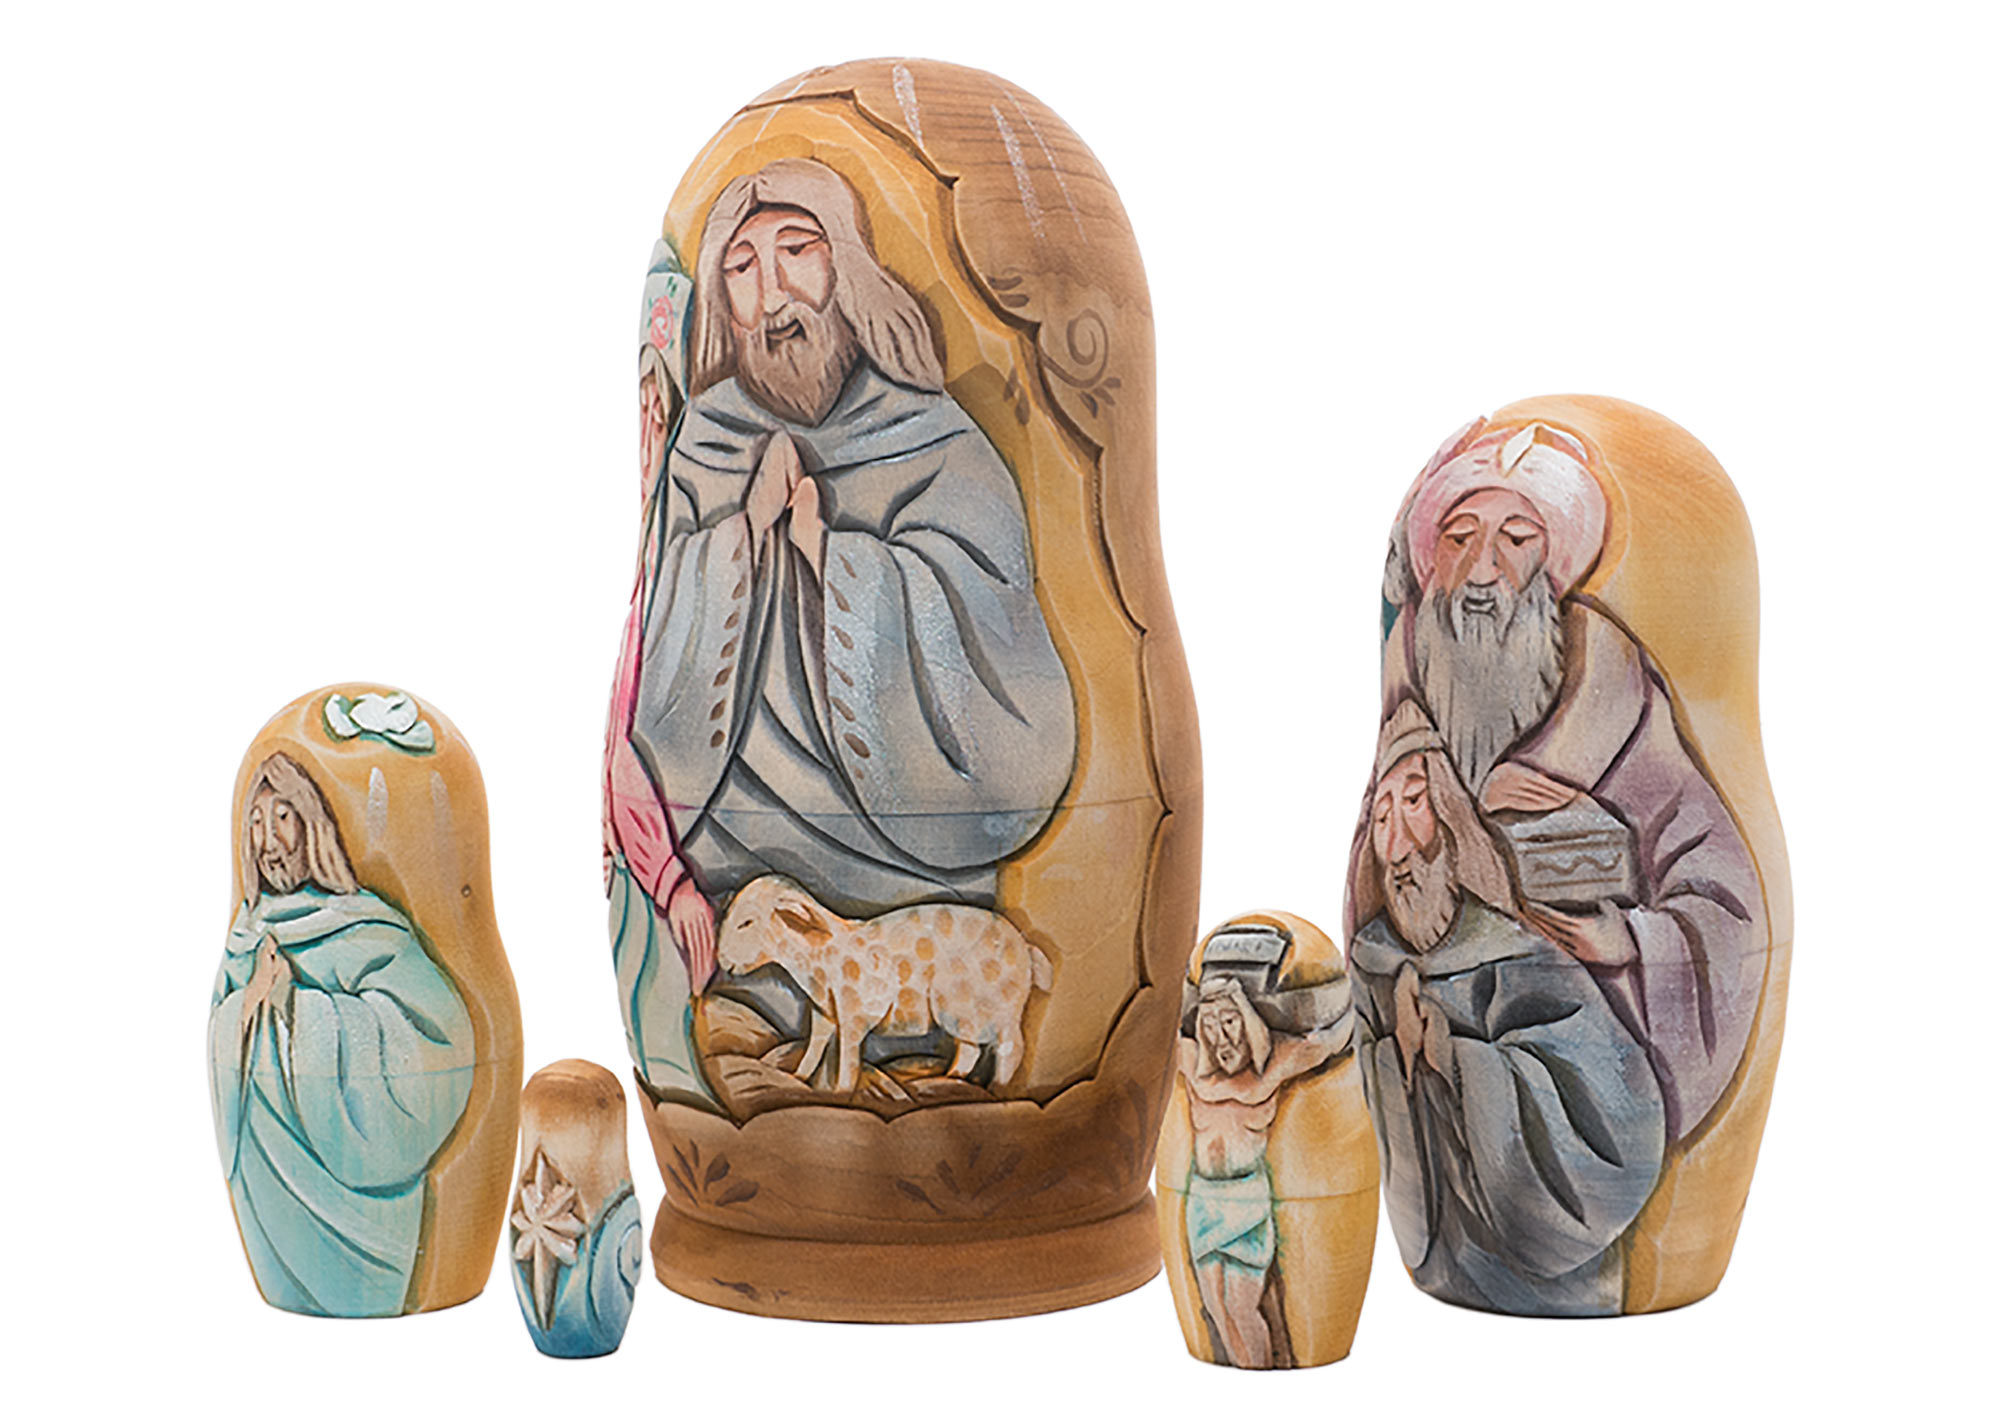 Buy Carved Life of Christ Nesting Doll by Koblov 5pc./7" at GoldenCockerel.com